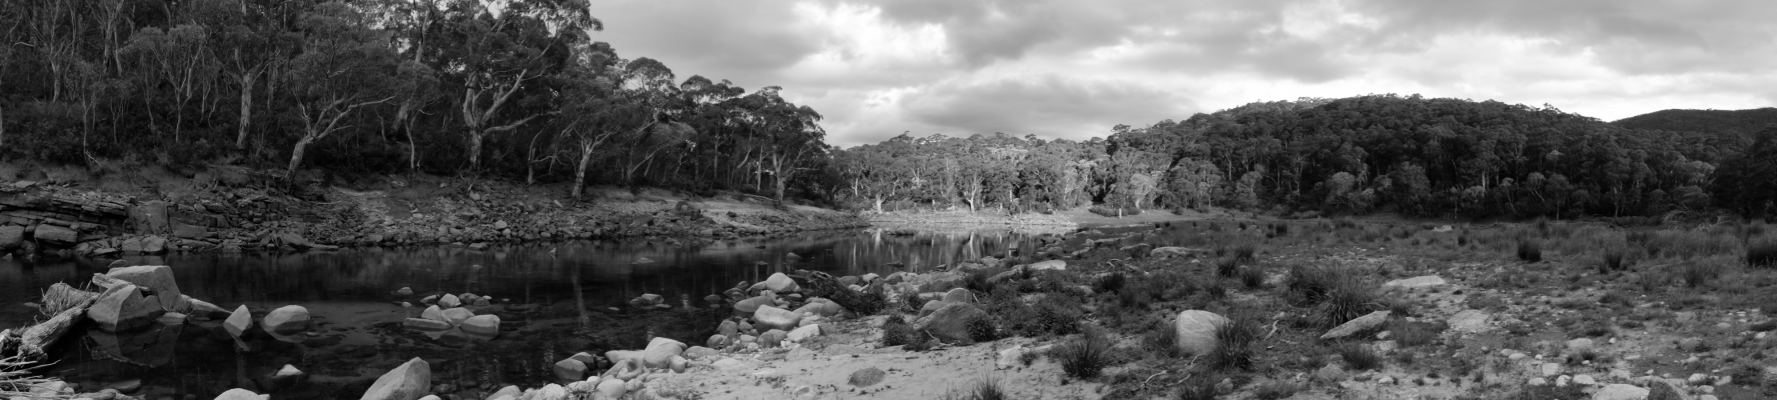 Kosciuszko National Park NSW AU Photos 1013